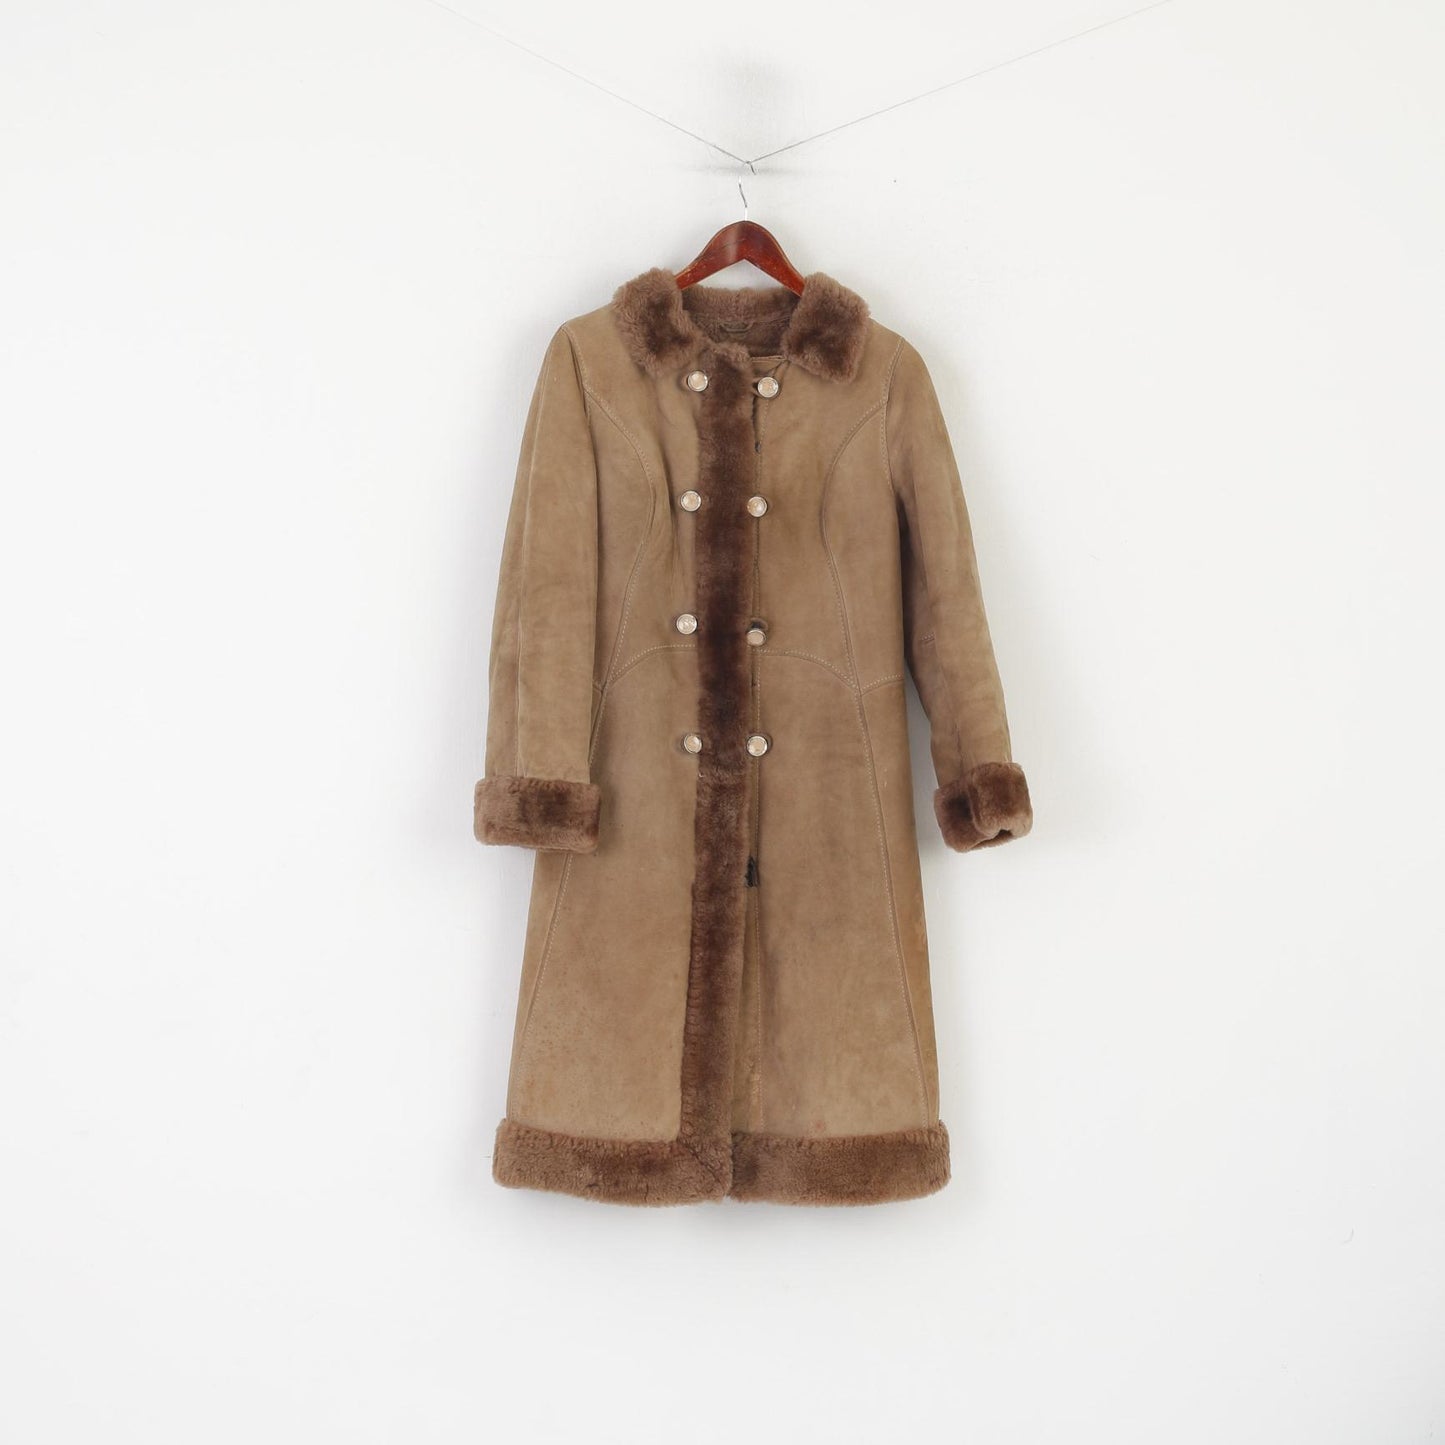 Vintage Women 44 S Coat Beige Leather Fur Collar Detailed Buttons Boho Warm Top